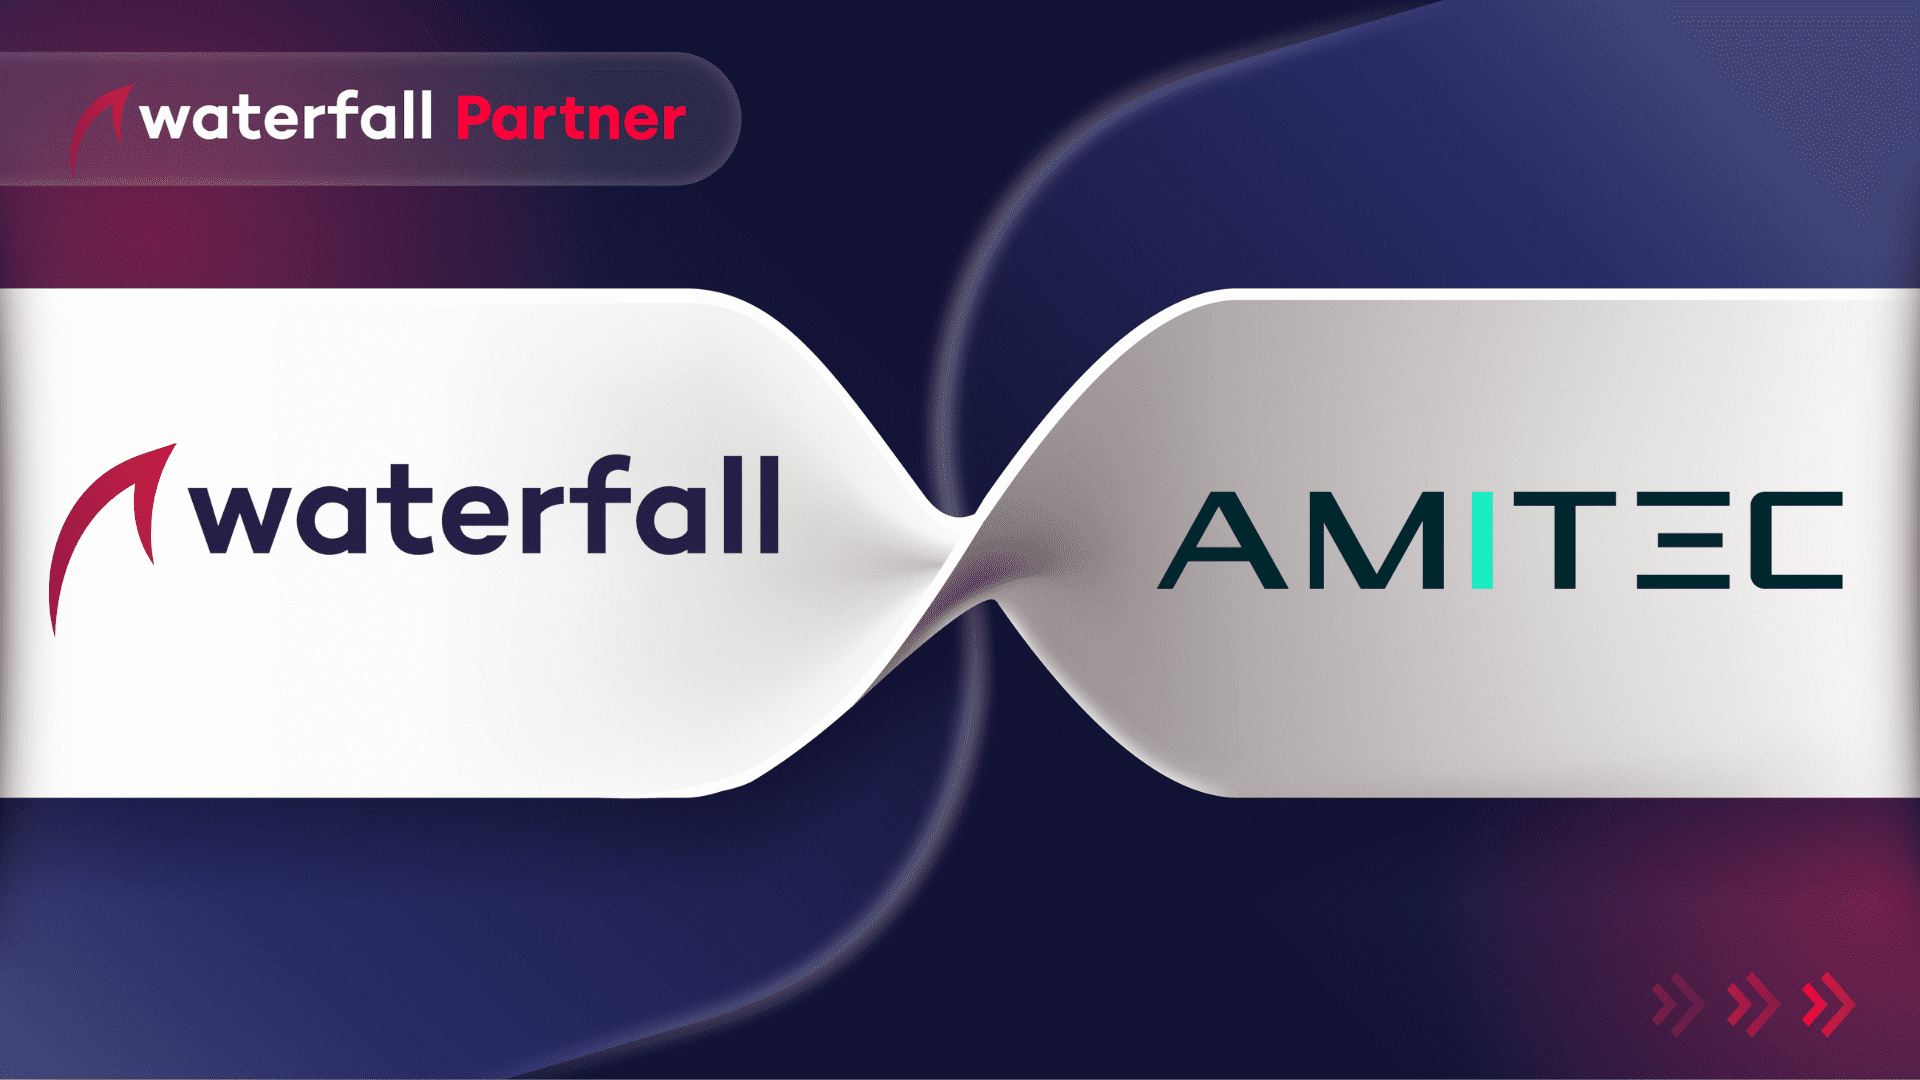 Amitec Waterfall Partnership